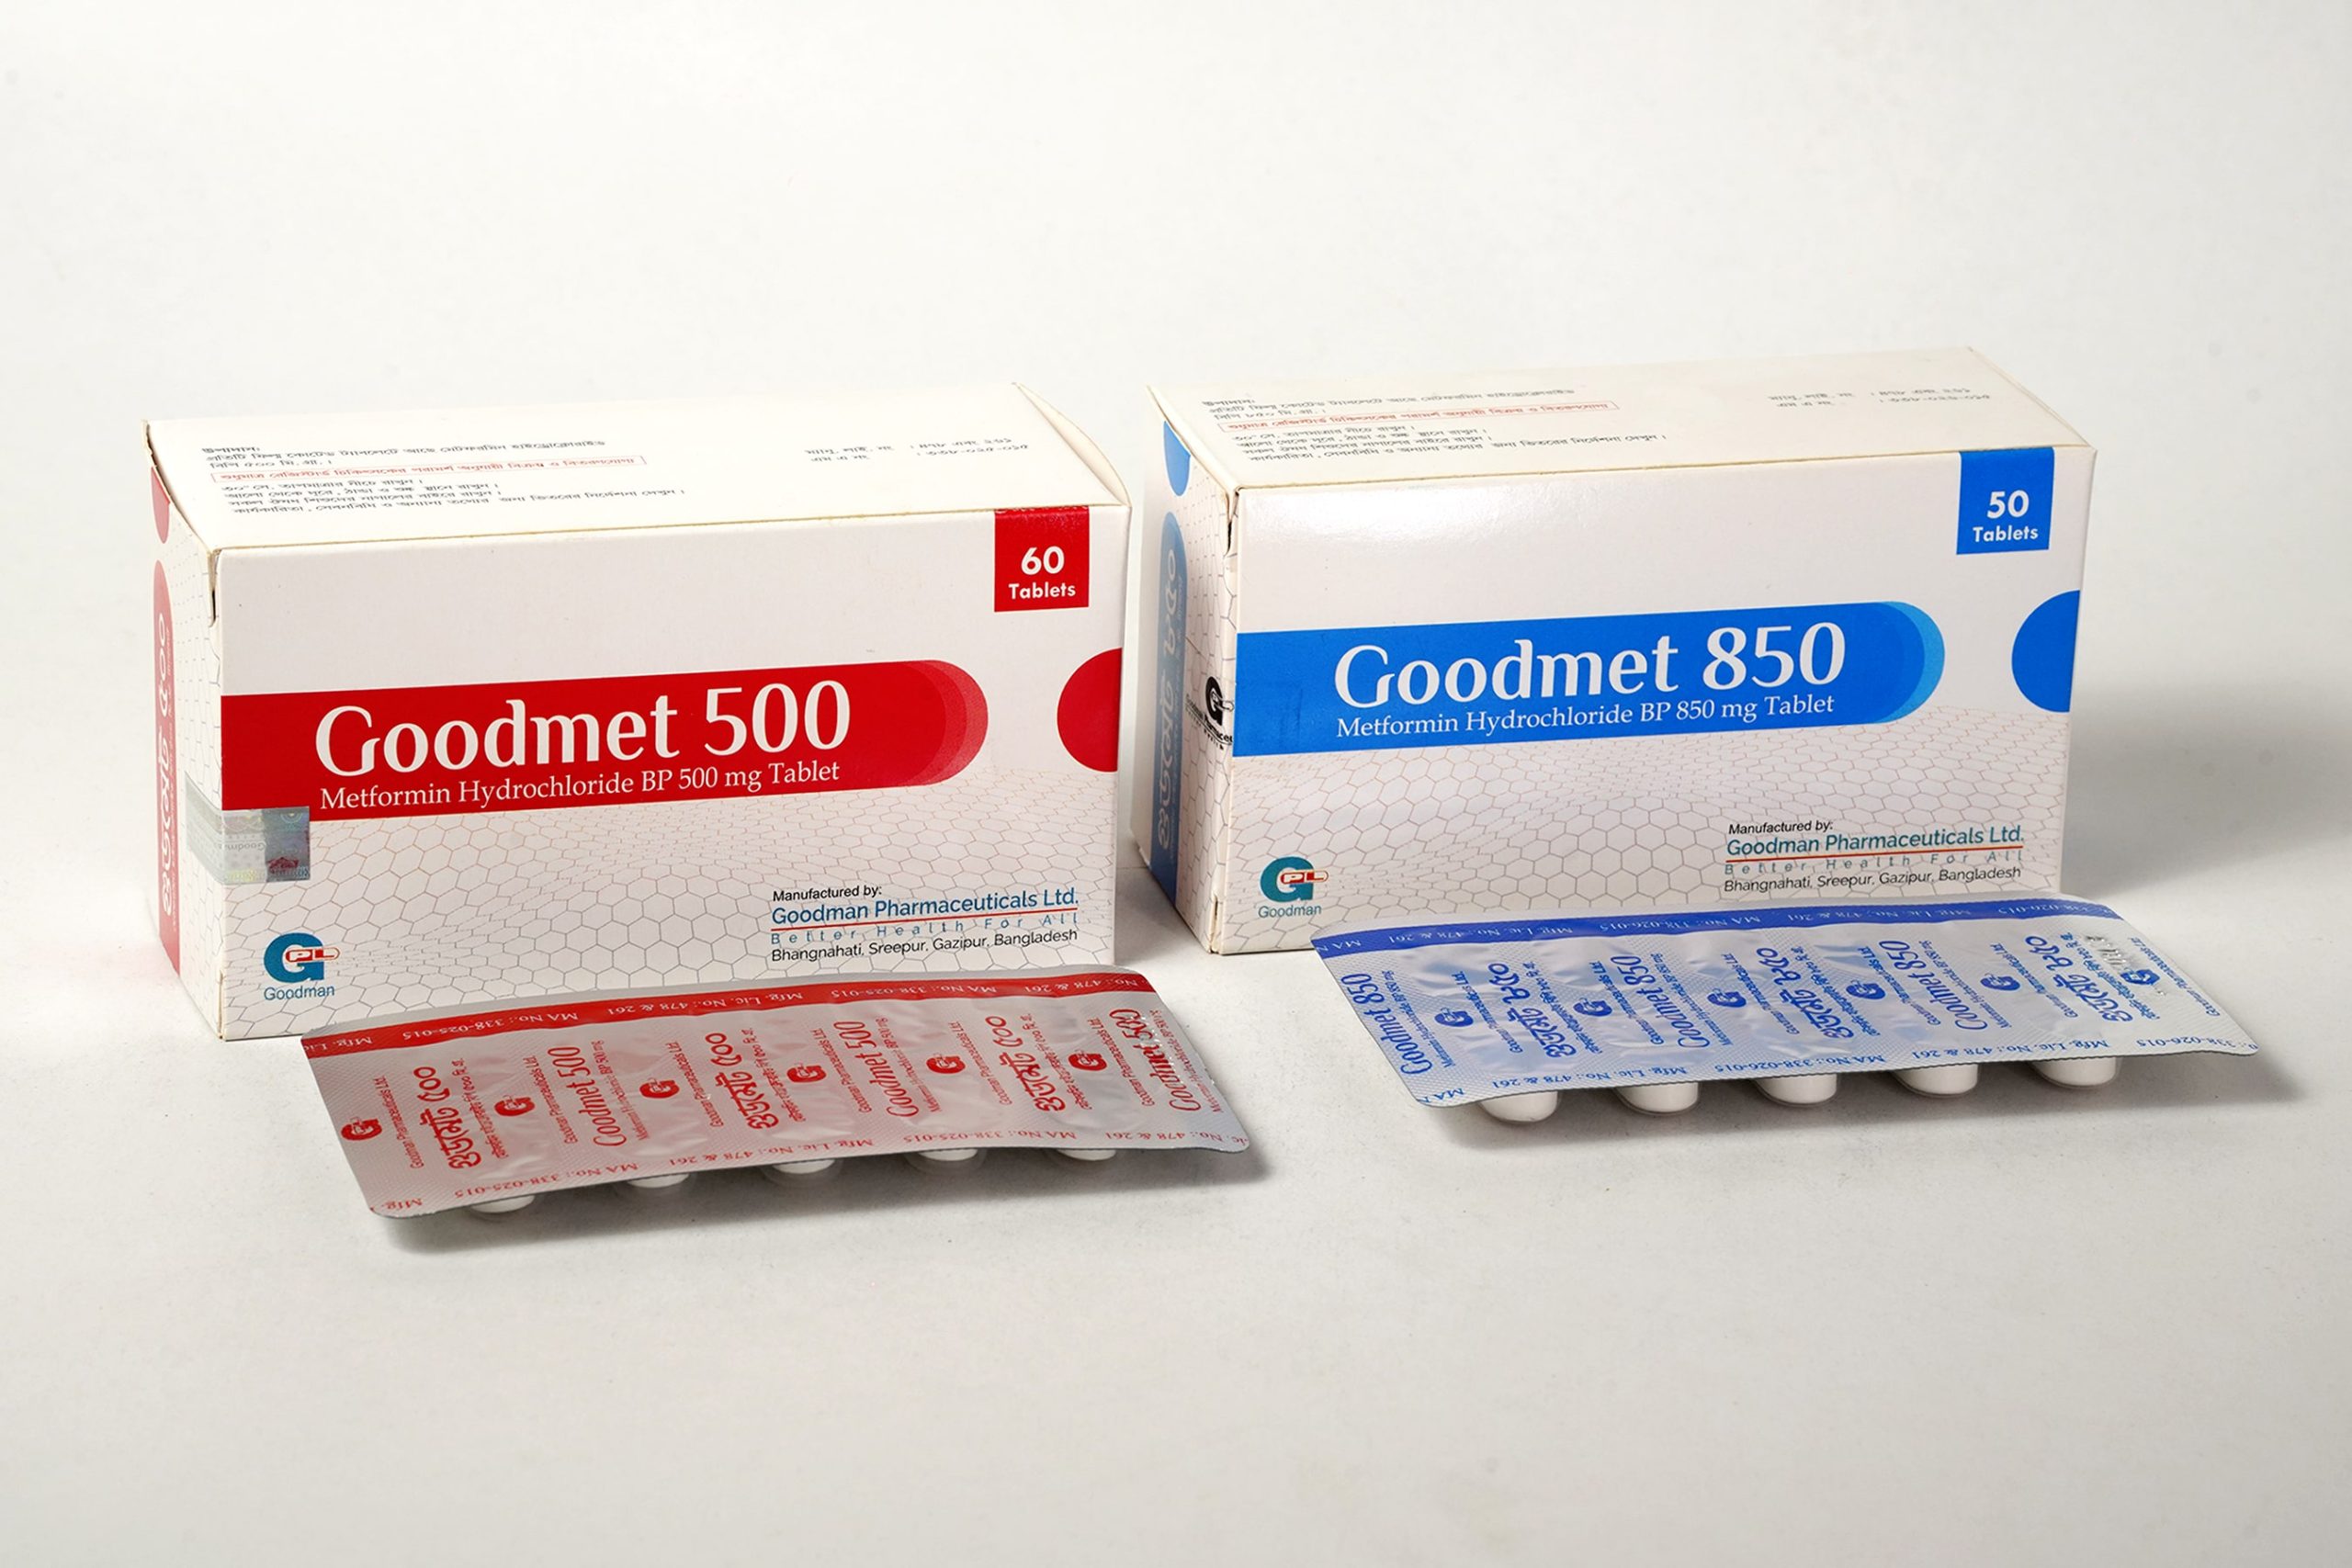 Goodmet 850 Group-min